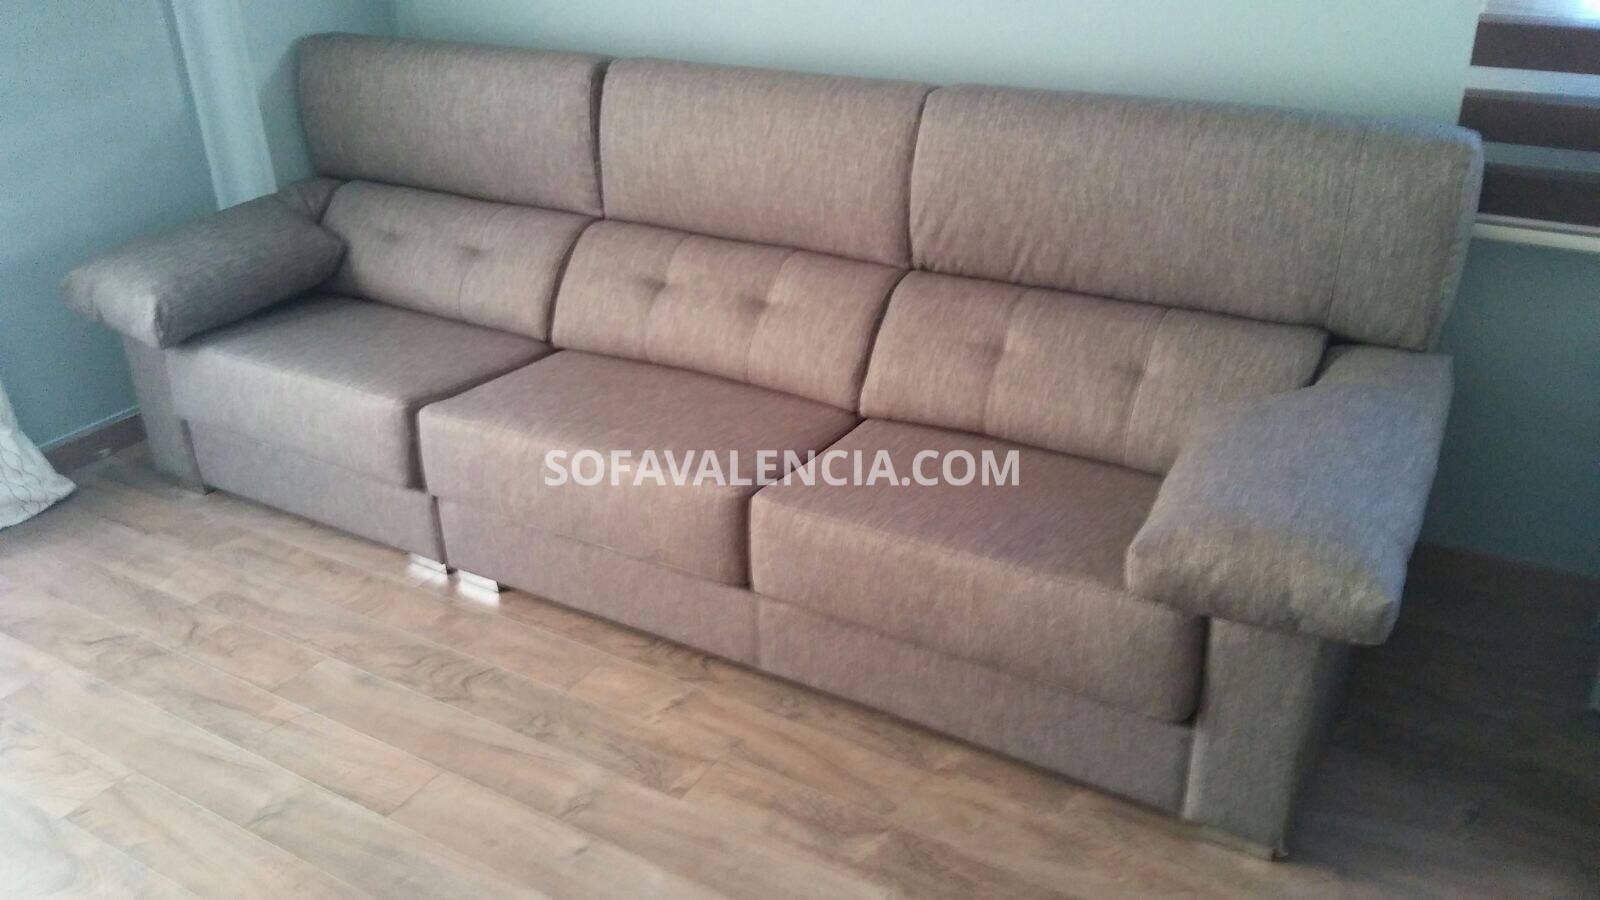 sofa-valencia-fotos-clientes-53